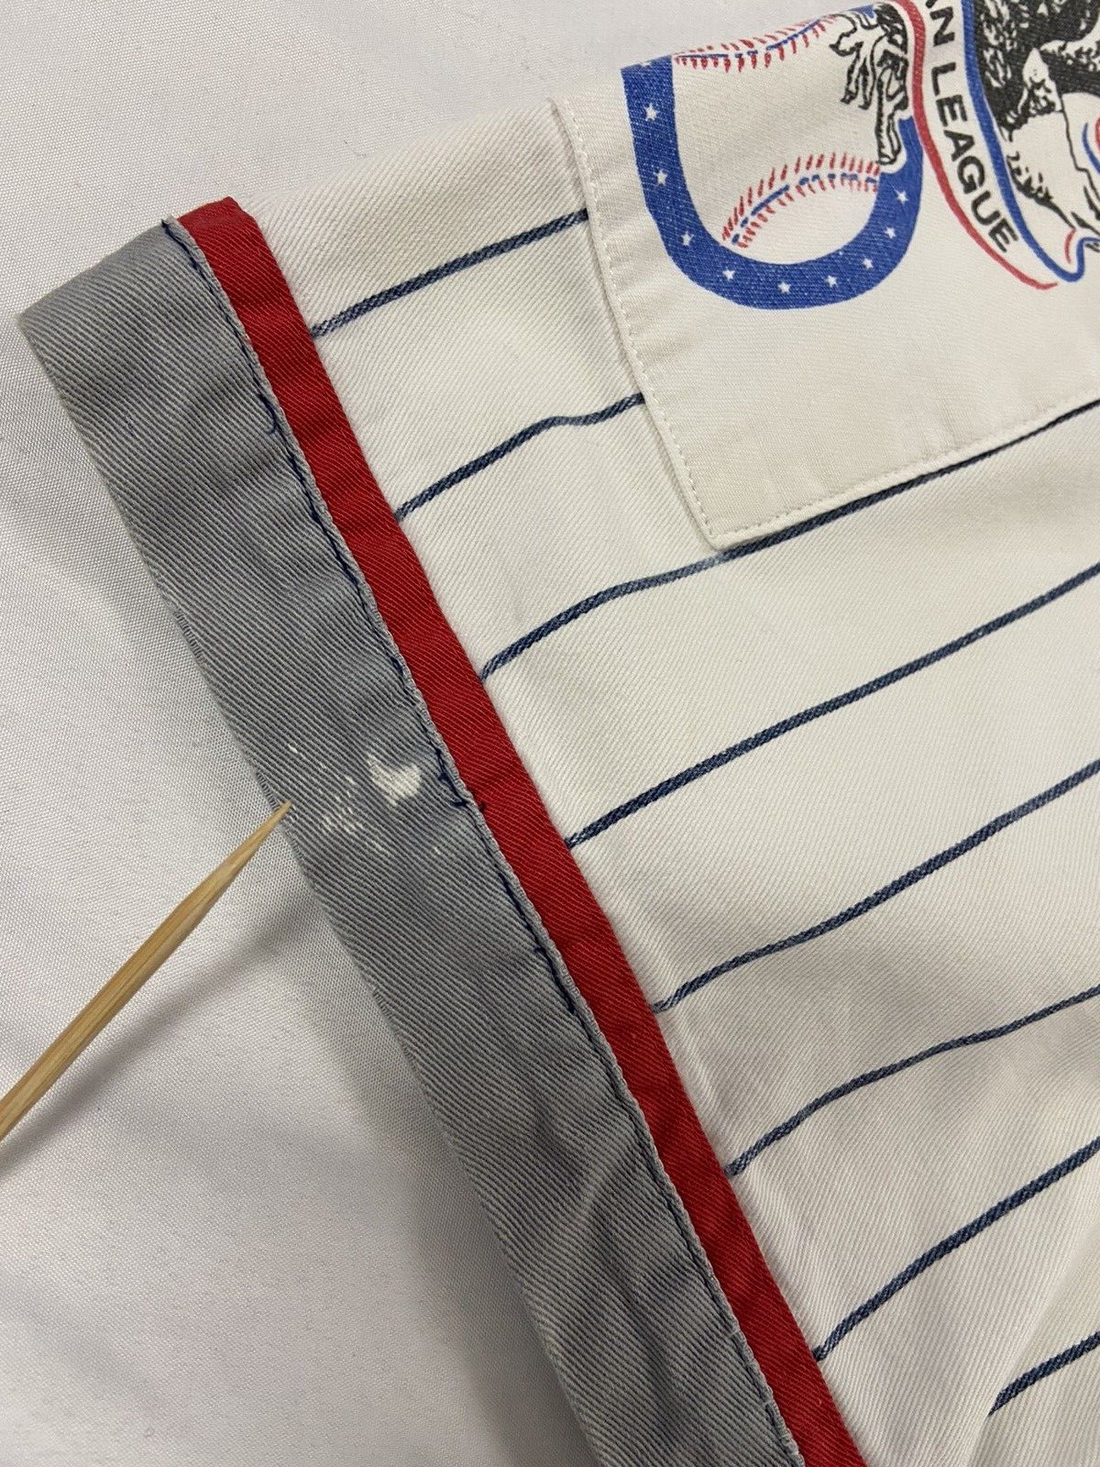 Vintage New York Yankees Script Starter Baseball Jersey Medium Pinstripe MLB